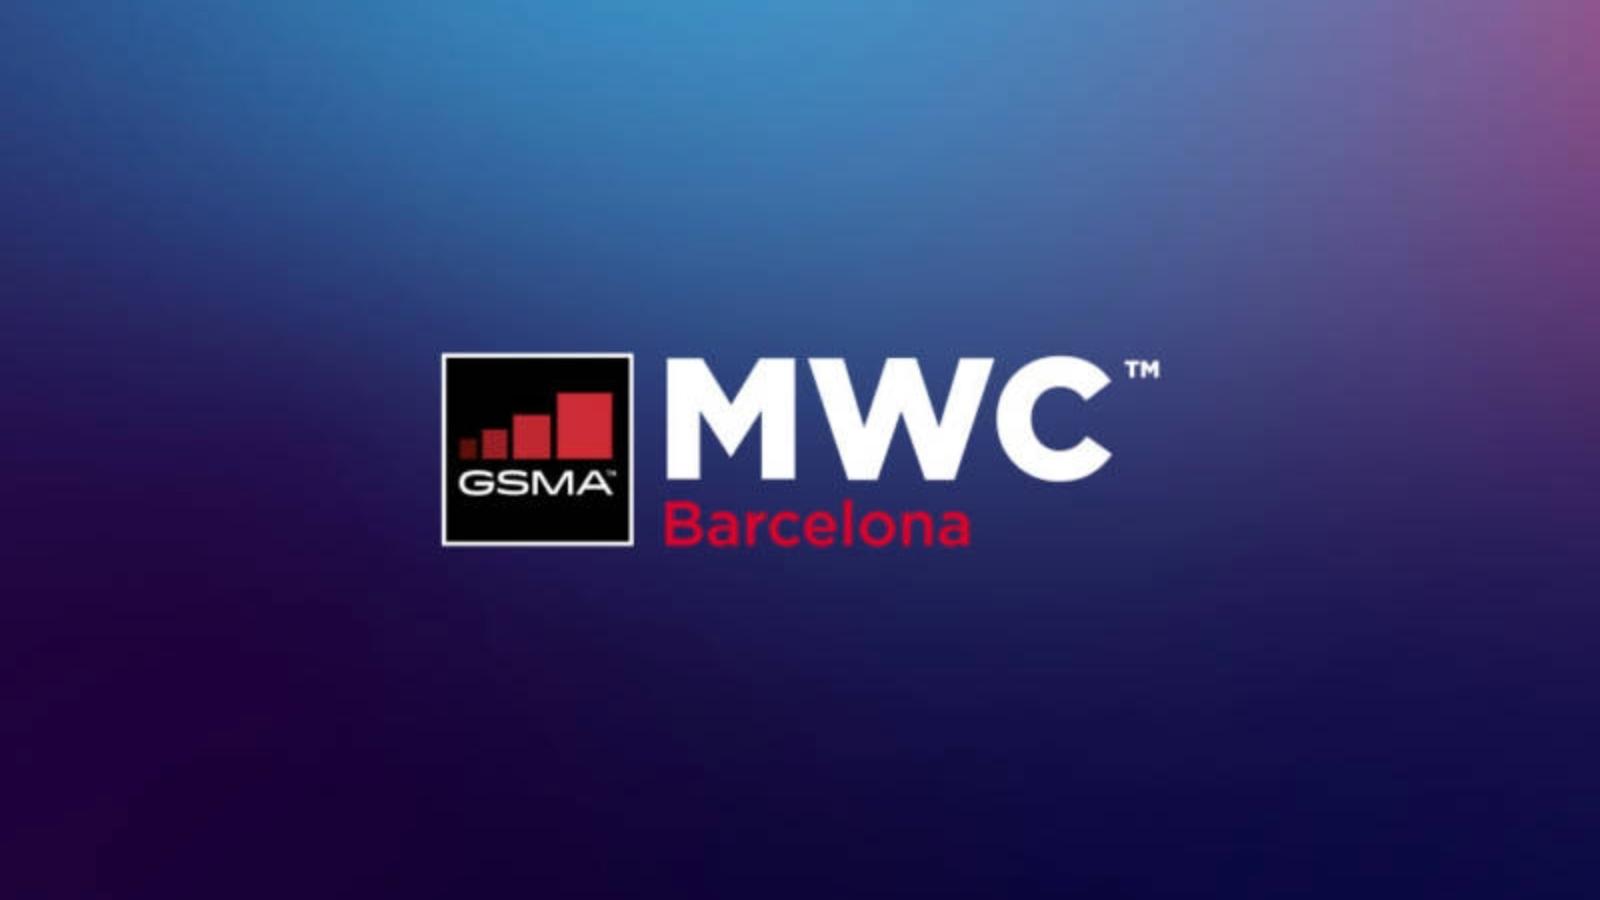 MWC Barcelona logo